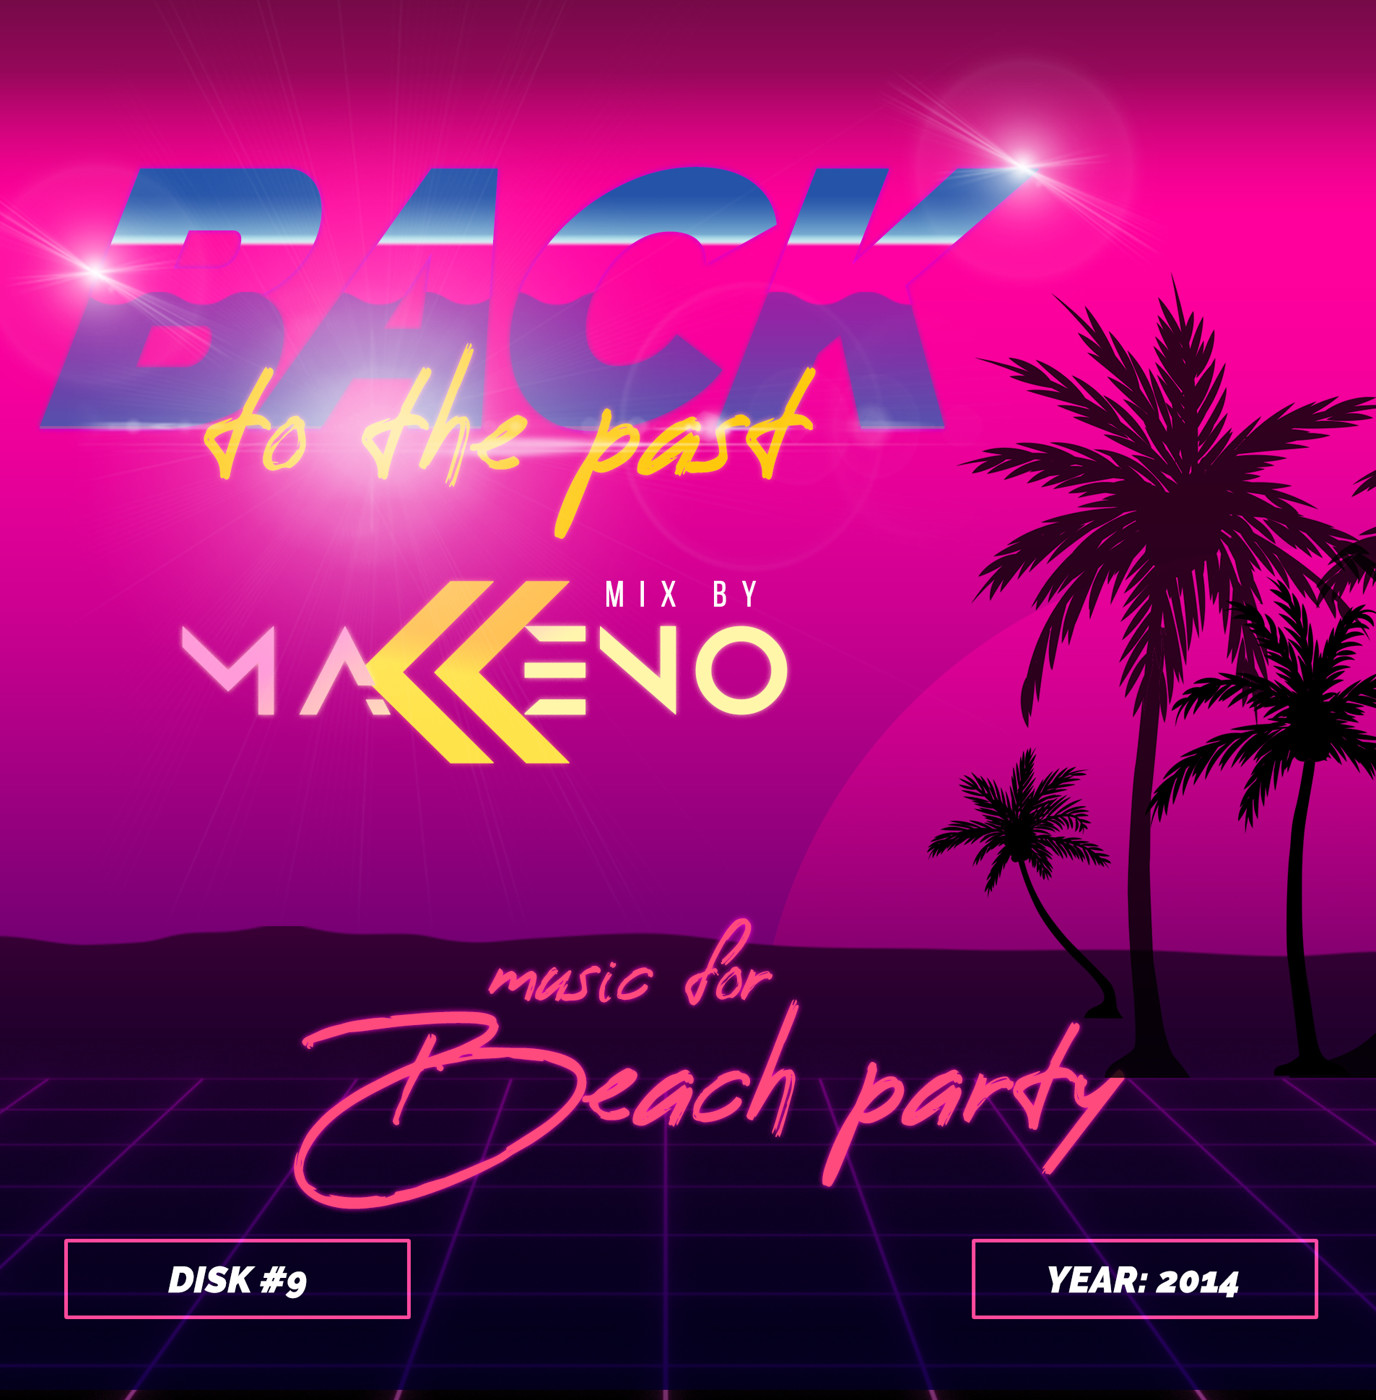 Makkeno - BACK TO THE PAST #9 Beach Party